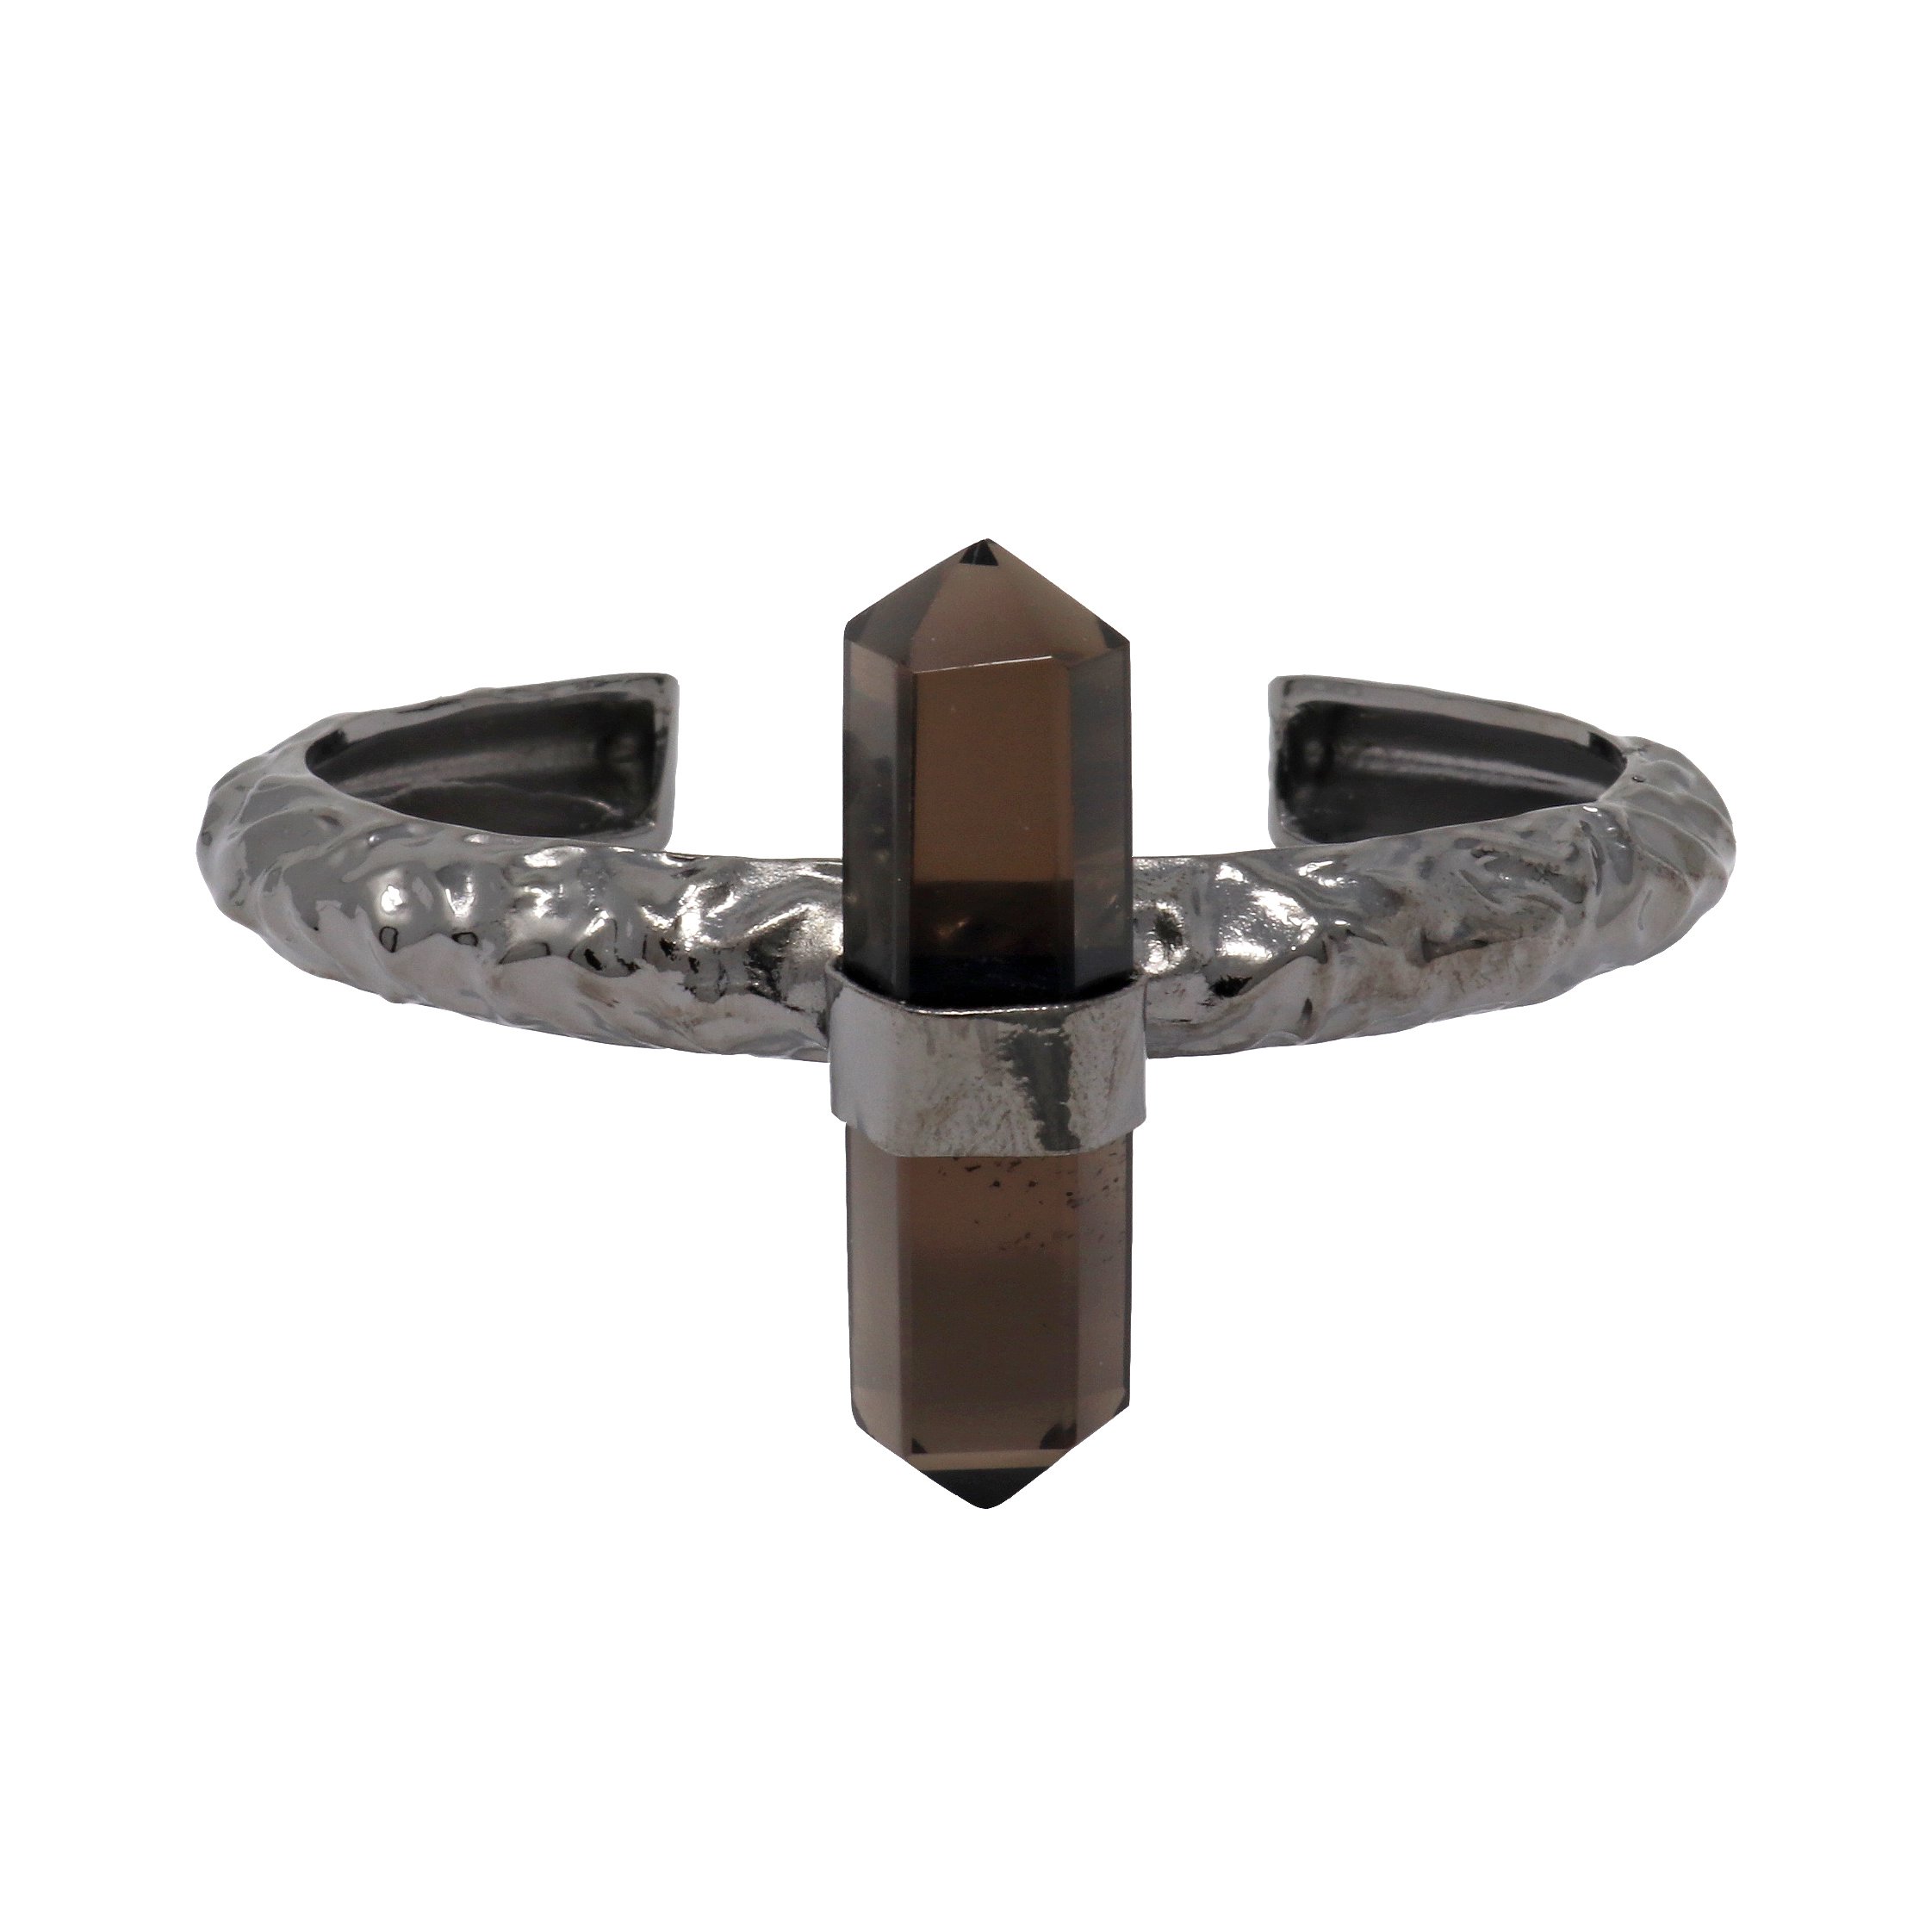 Smoky Quartz Cuff Bracelet - Double Point Ruthenium Plated Band